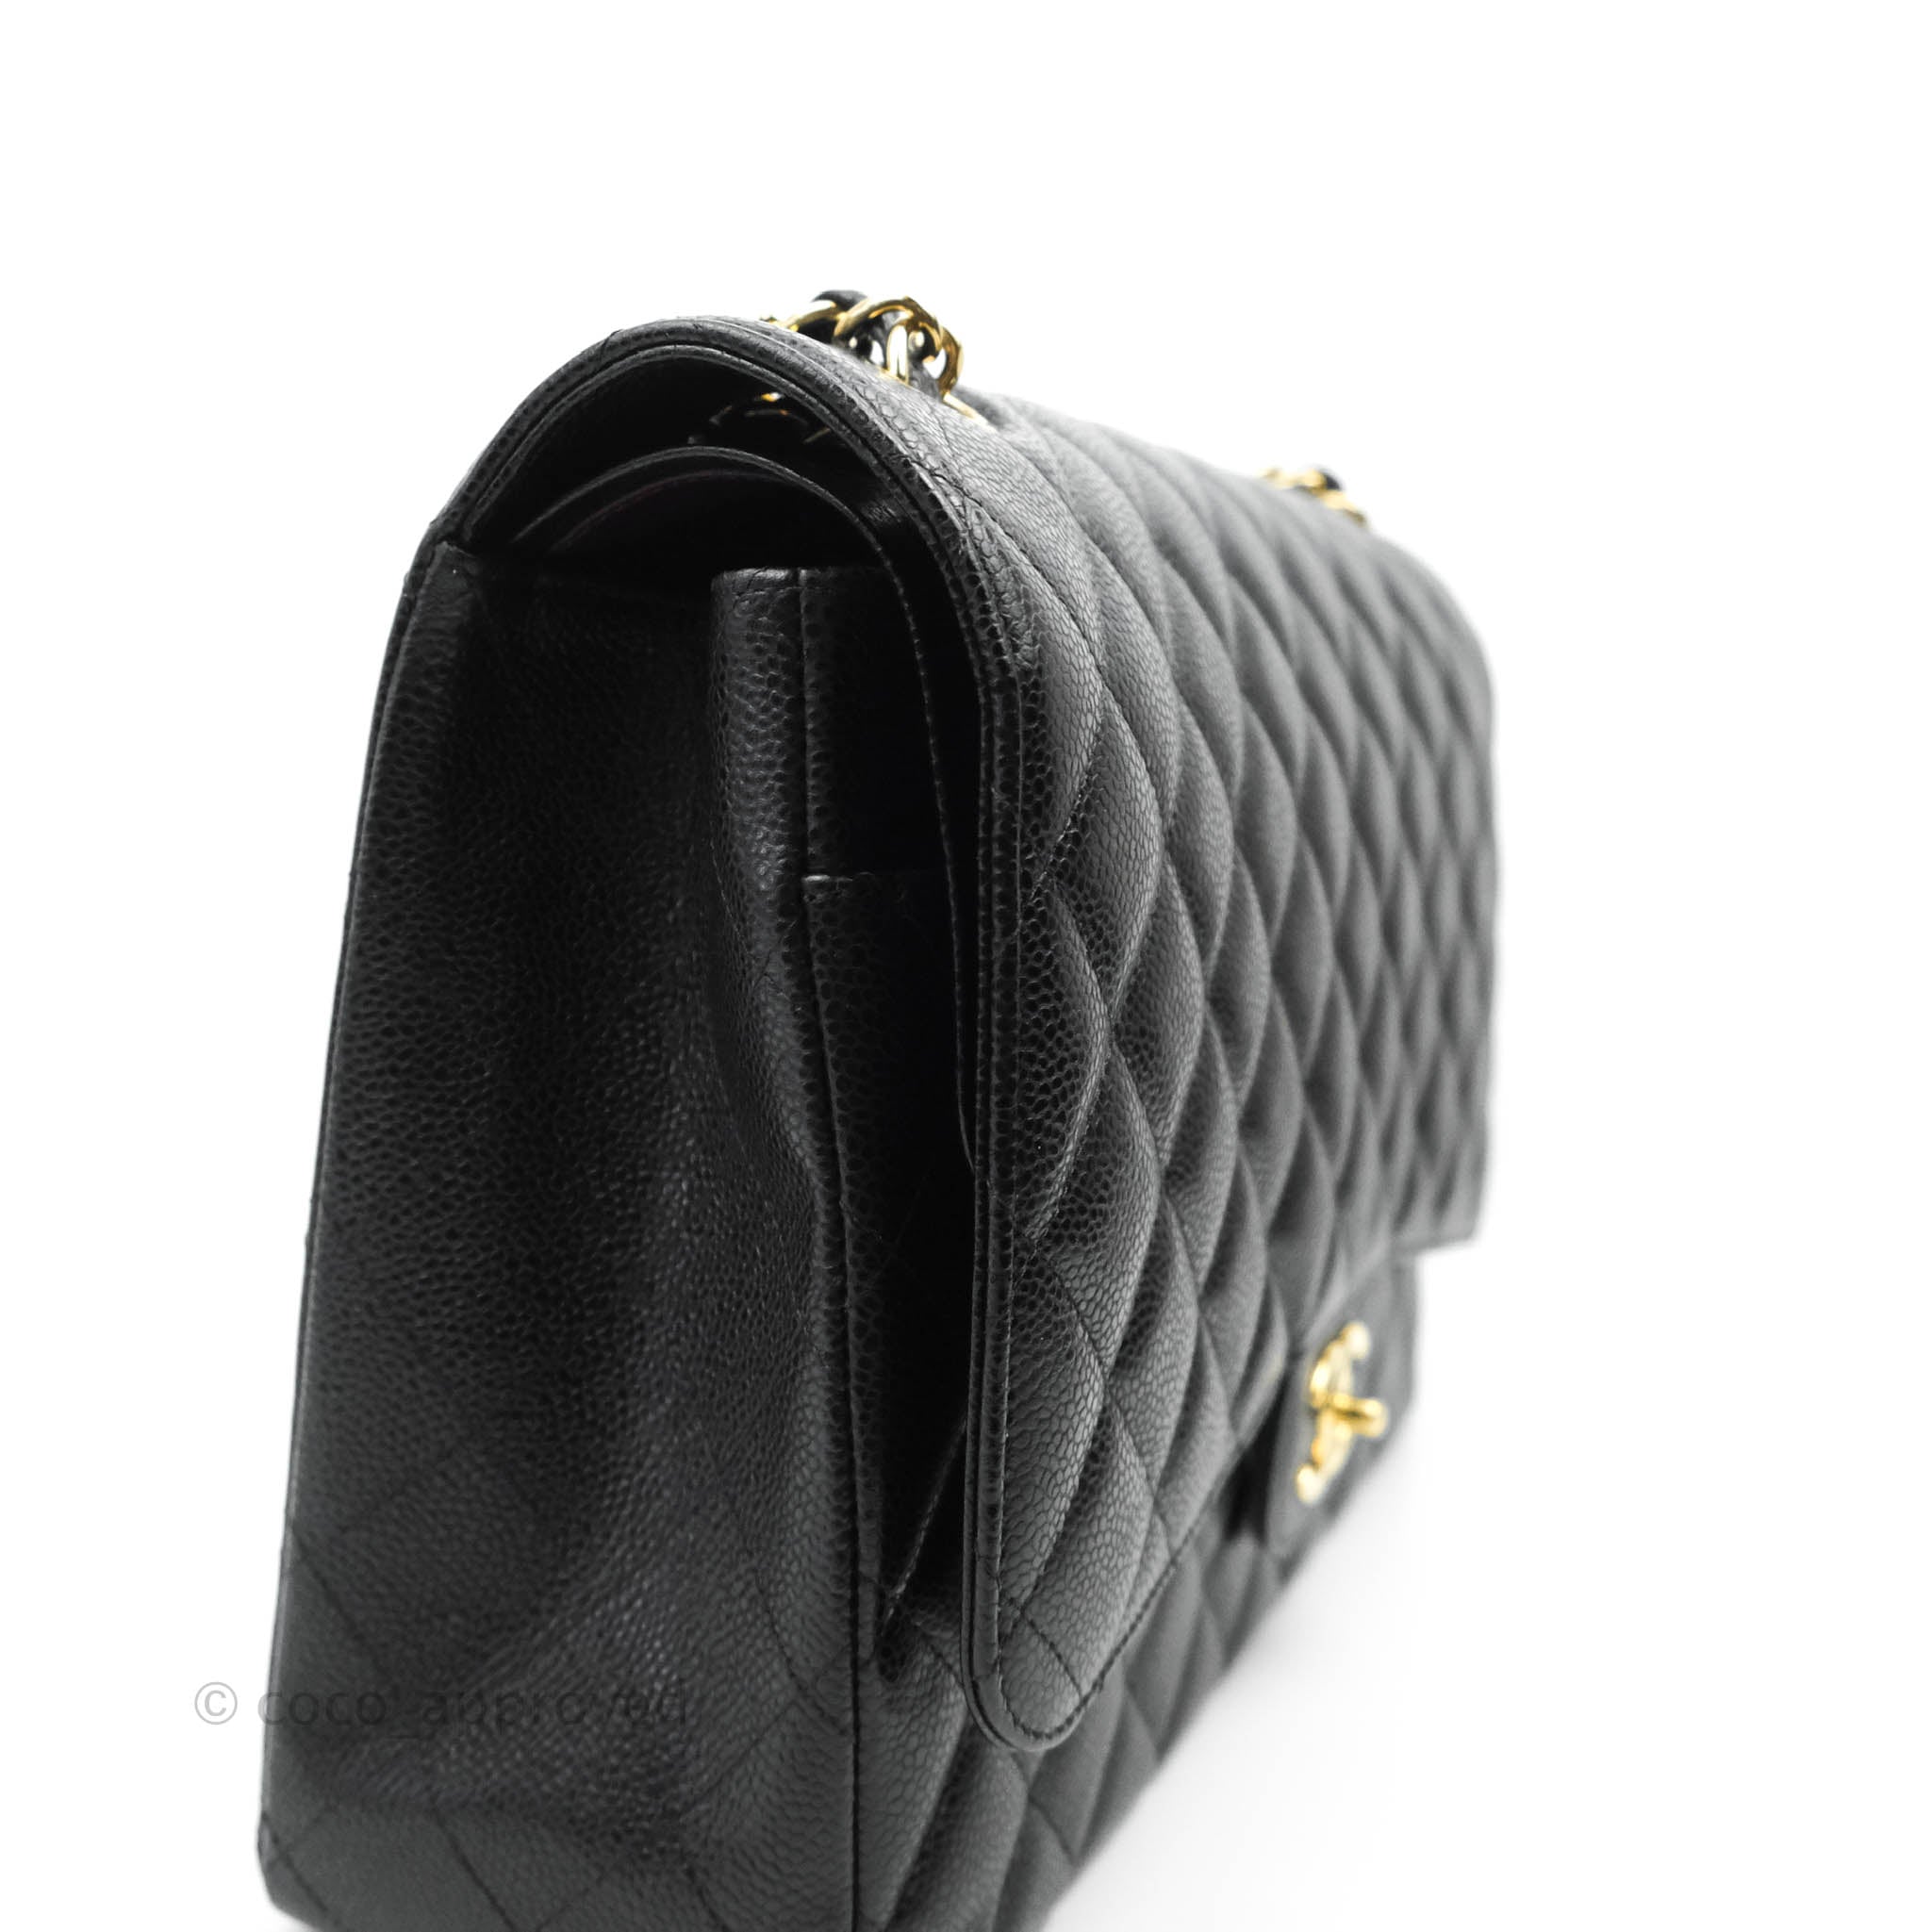 Chanel Classic Double Flap Maxi Black Caviar Gold Hardware – Coco Approved  Studio